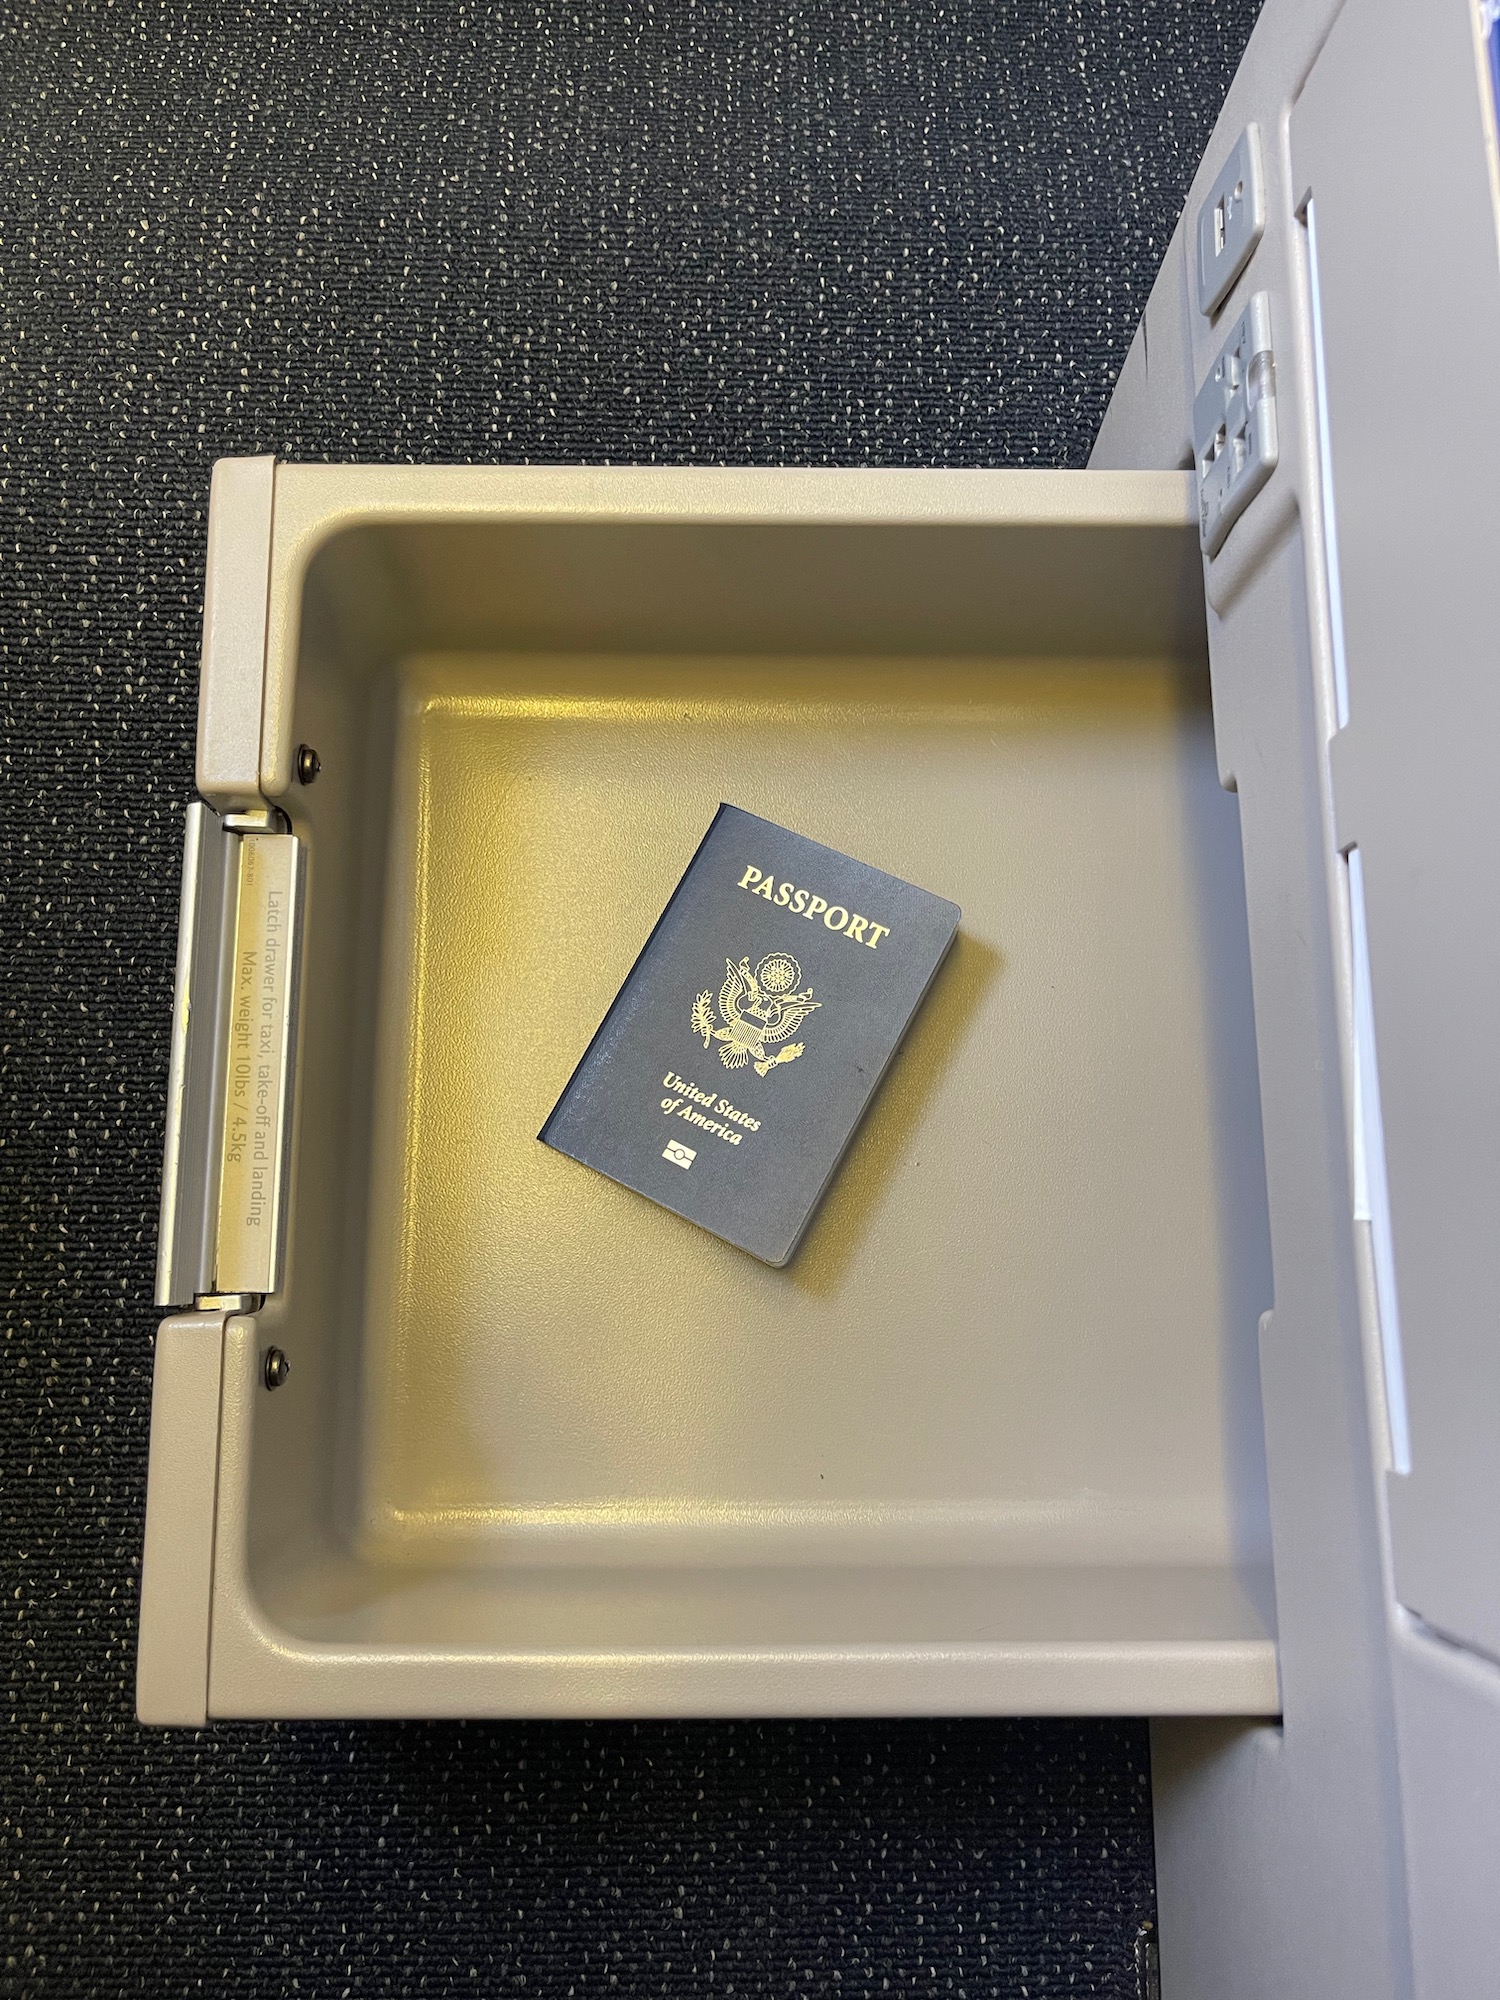 a passport in a safe